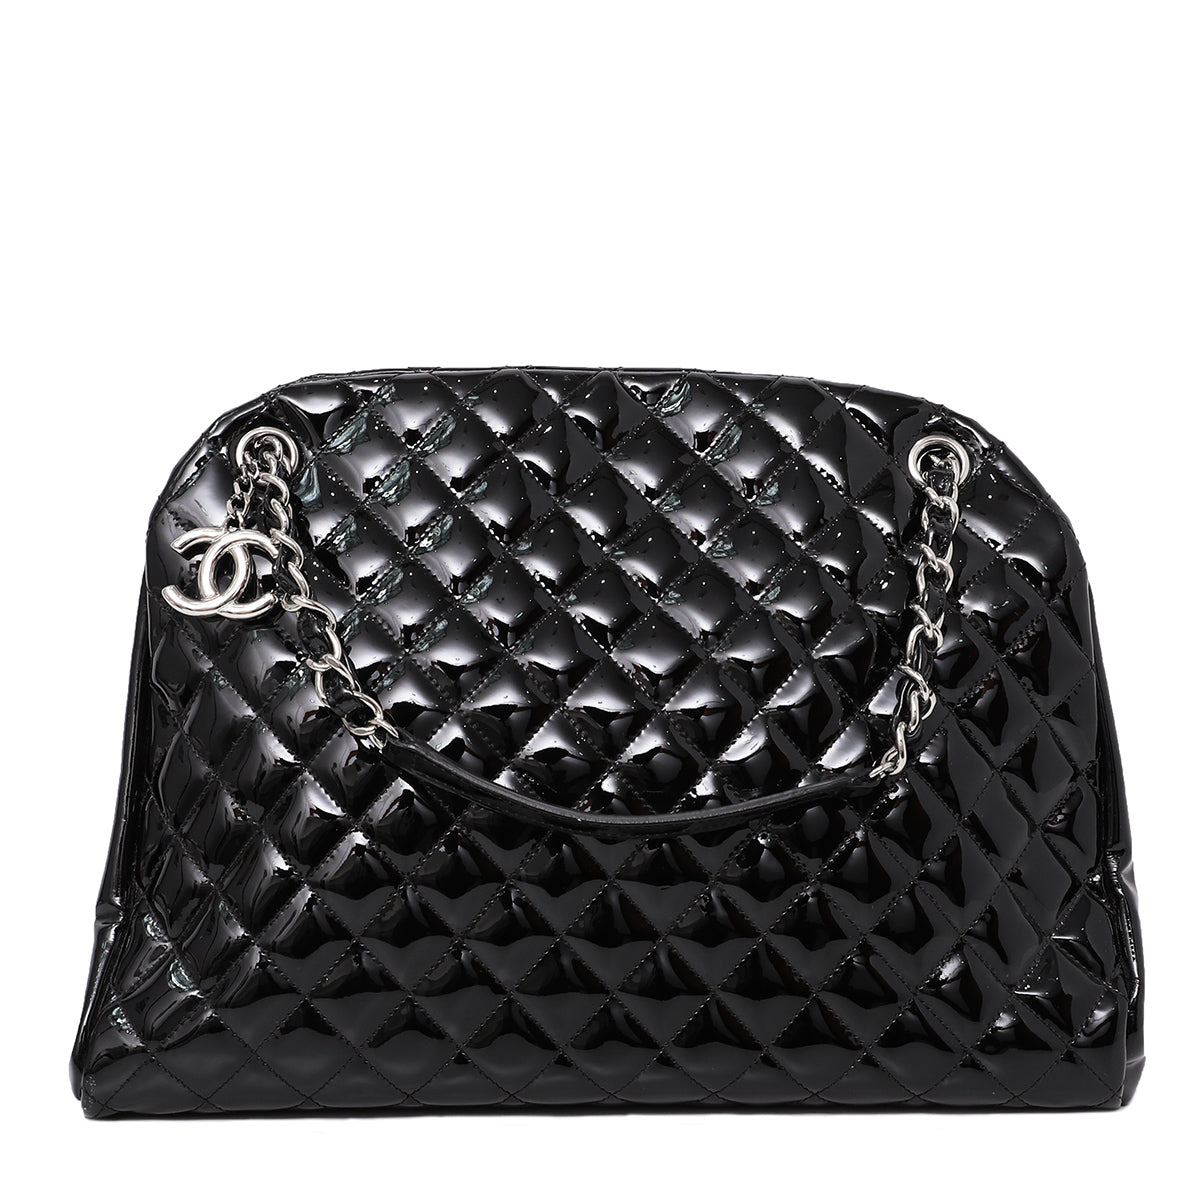 Chanel Black Mademoiselle Bowling Bag